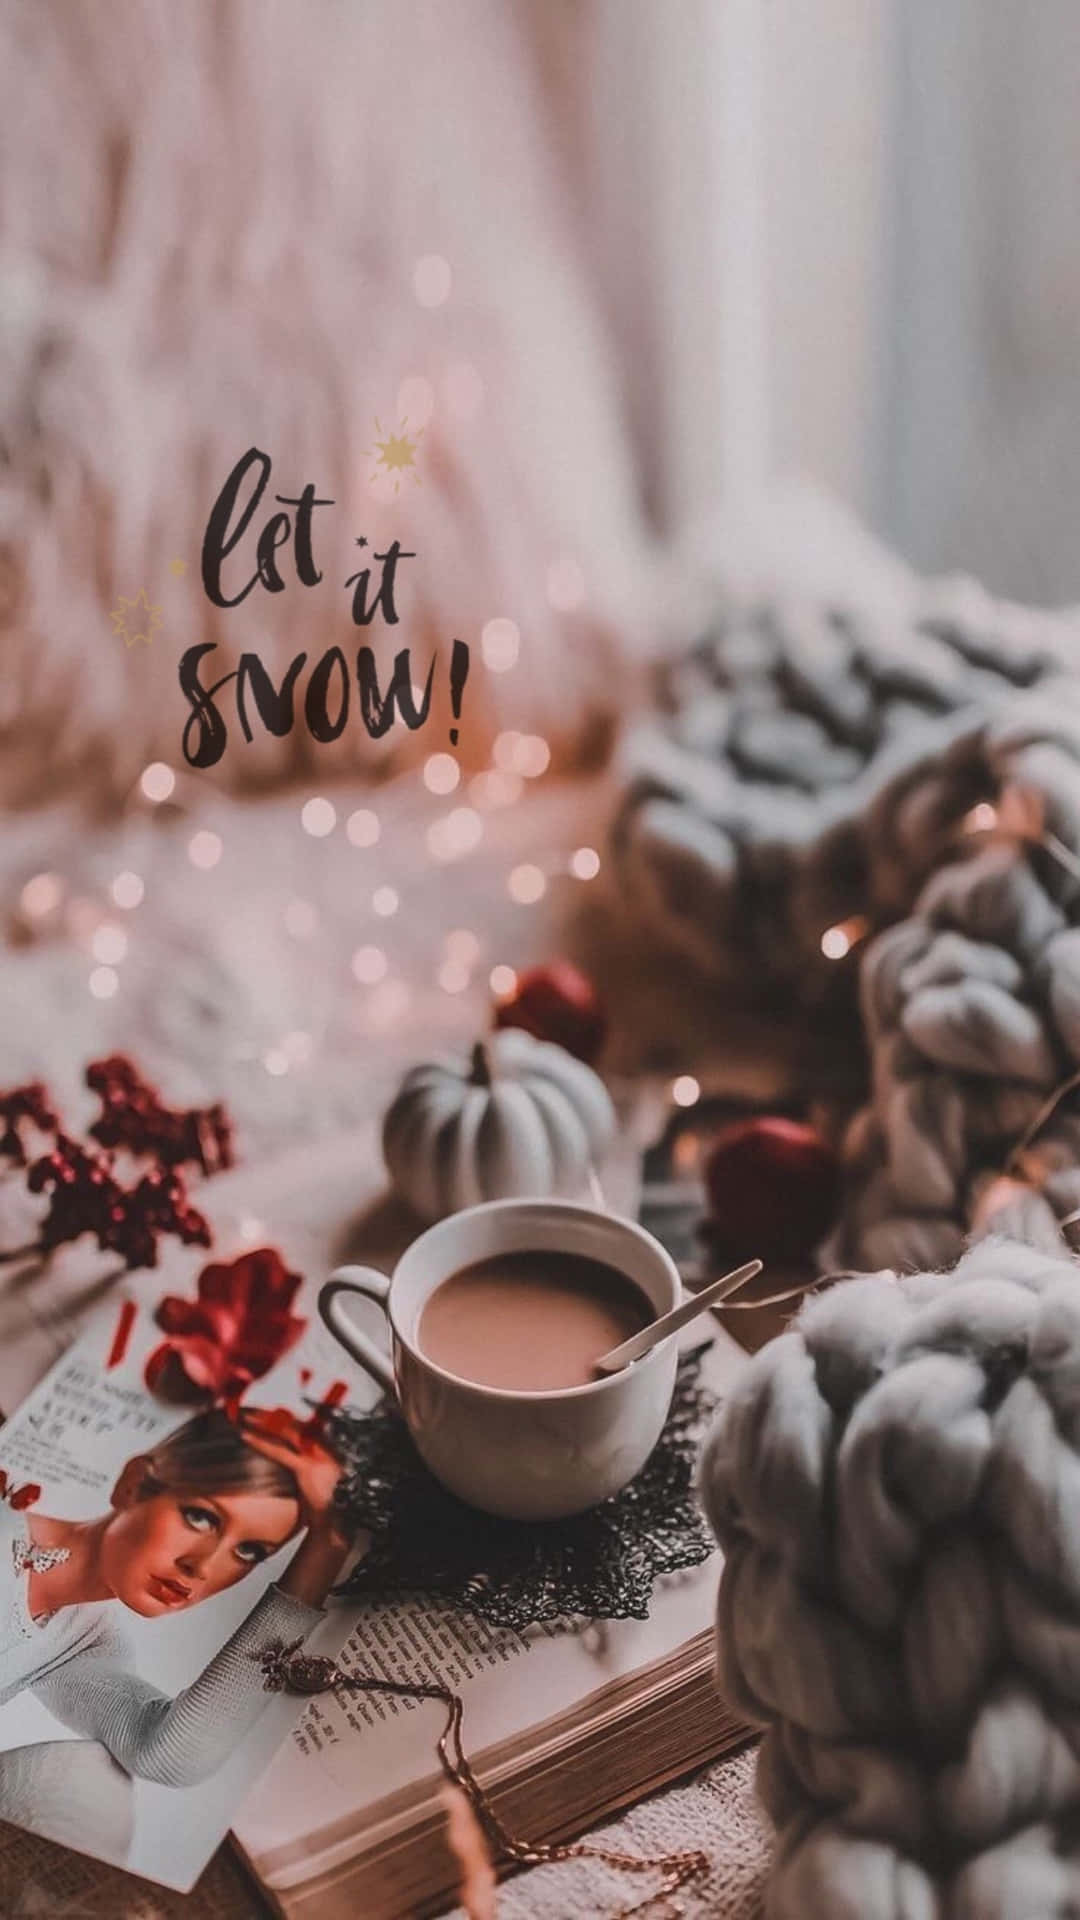 Cozy Winter Readingwith Hot Cocoa Wallpaper